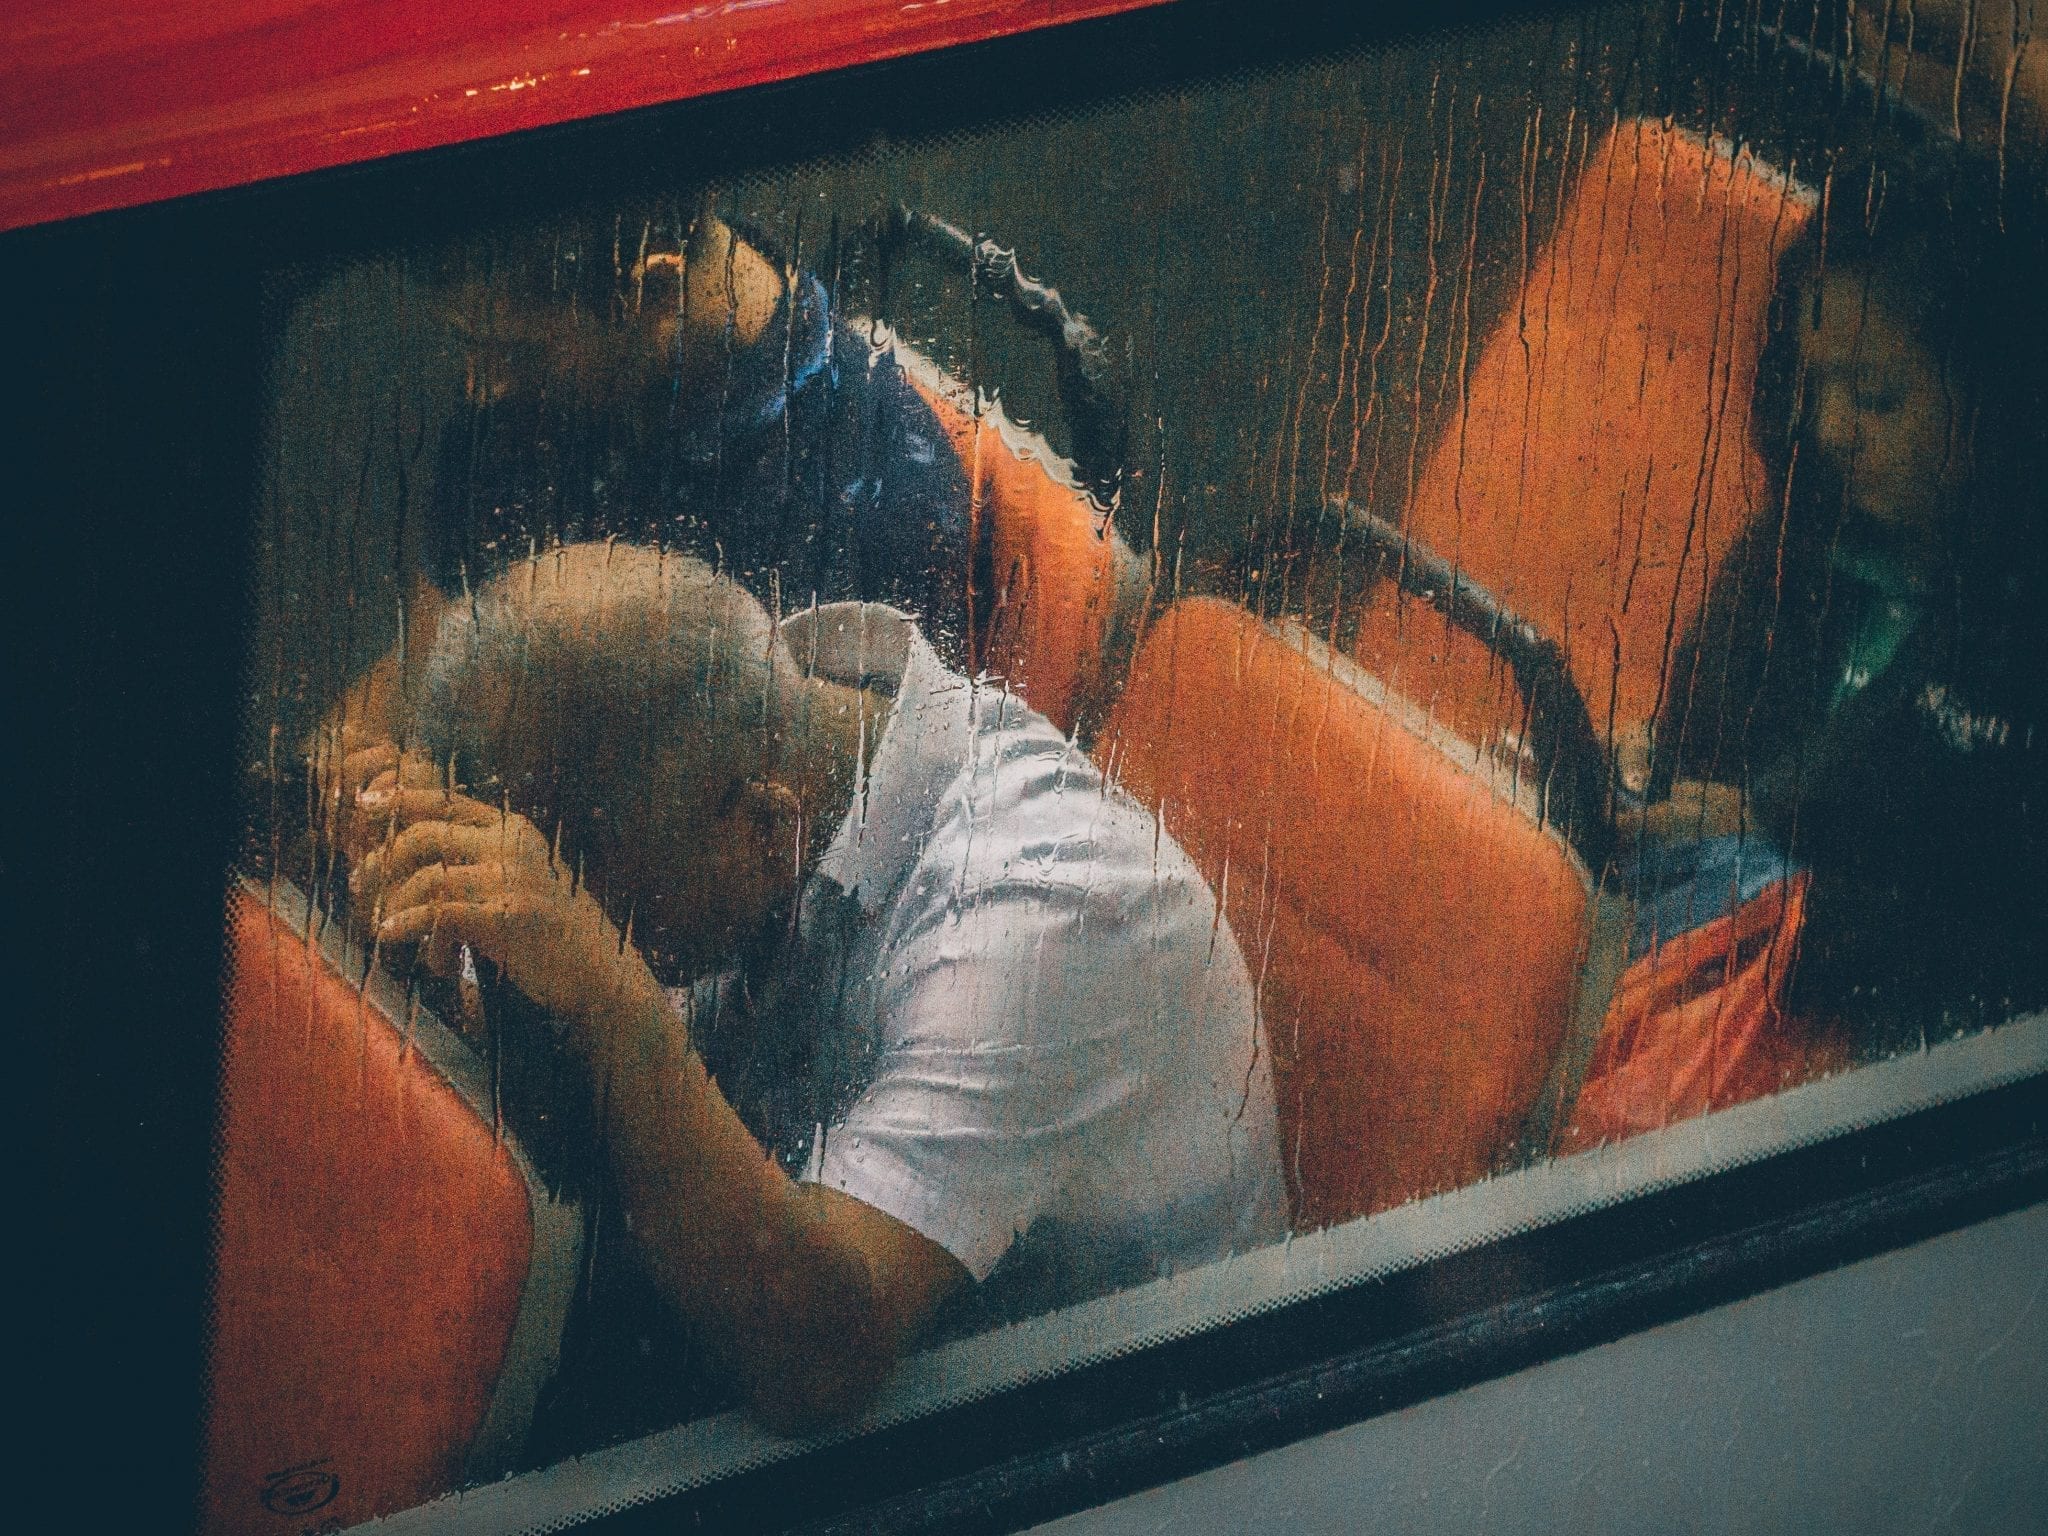 Man sleeping on train; image by Lily Banse, via Unsplash.com.